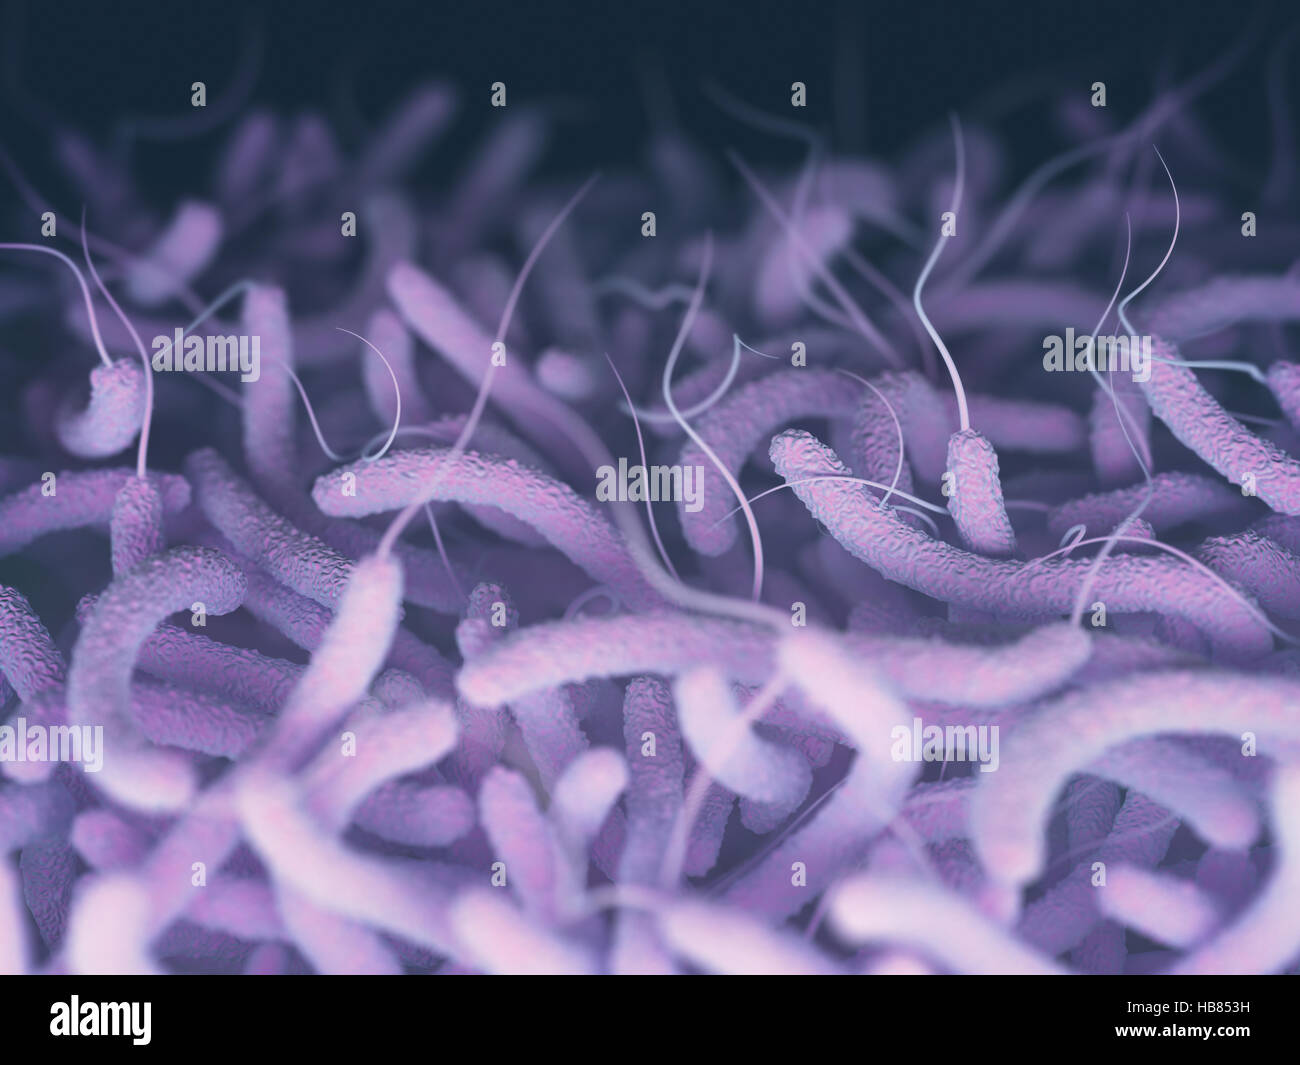 Vibrio Cholerae, Gram-negative bacteria. 3D illustration of bacteria with flagella. Stock Photo